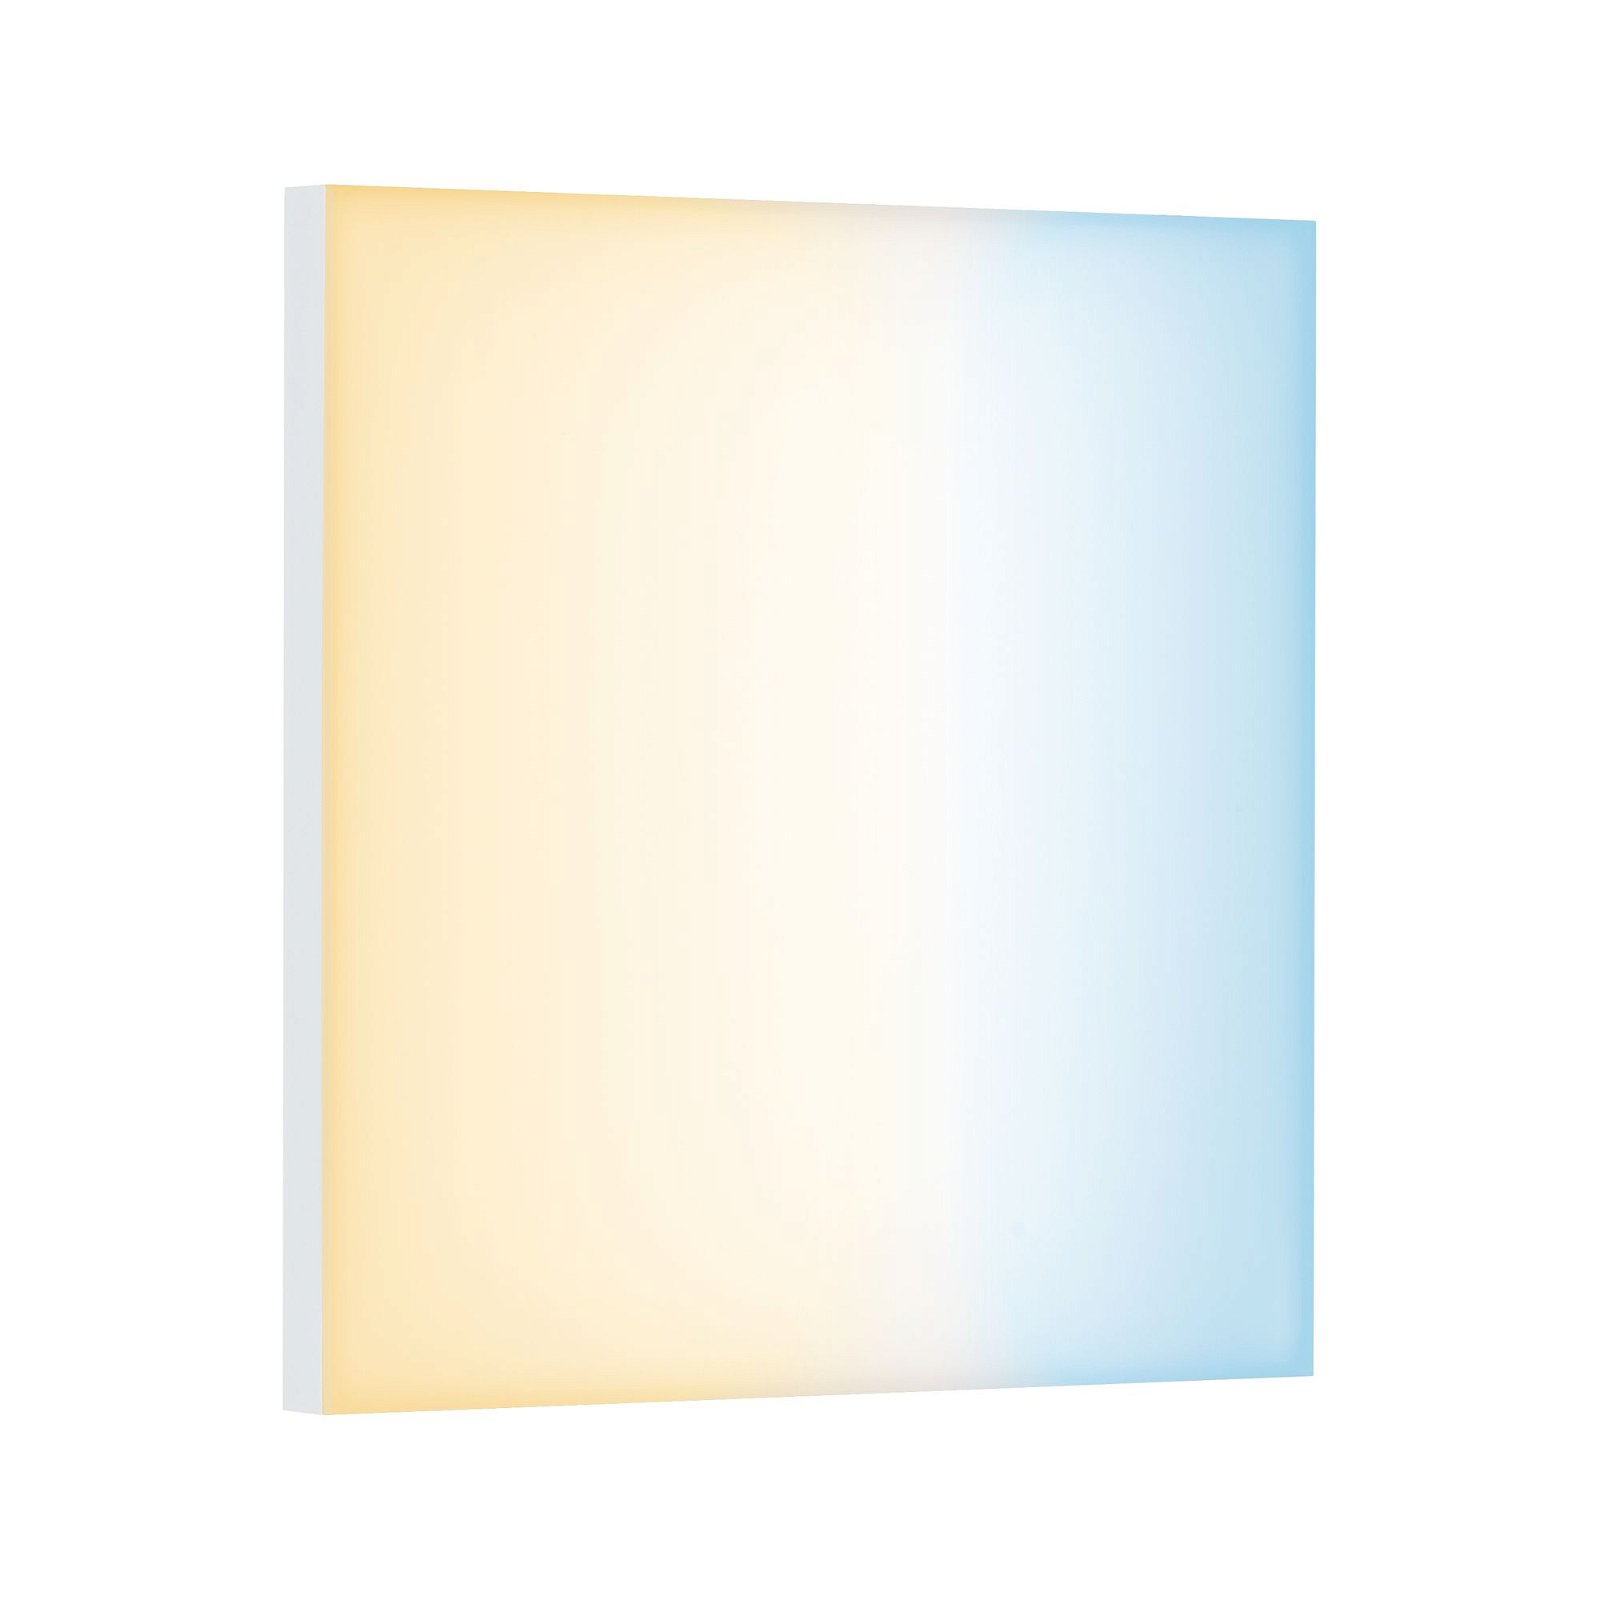 LED Panel Smart Home Zigbee 3.0 Velora eckig 295x295mm 10,5W 1100lm Tunable White Weiß matt dimmbar